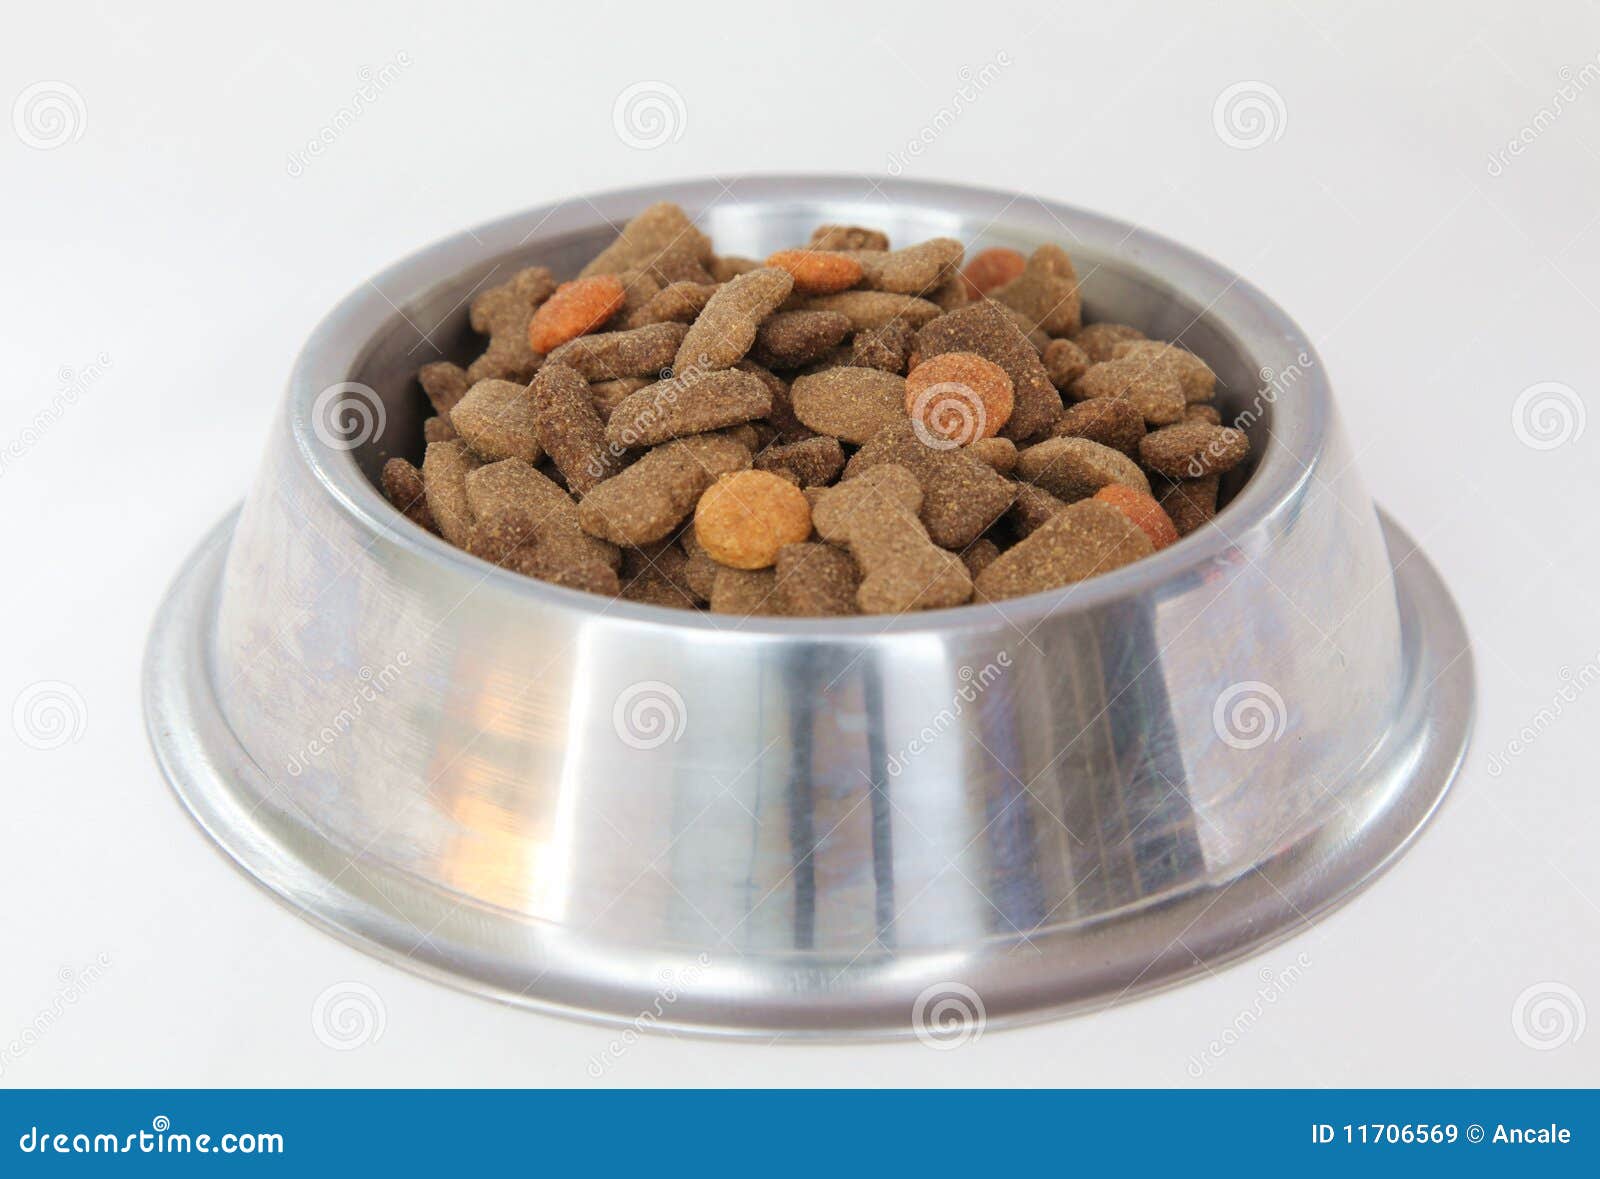 Dura Life Dog Food Ingredients